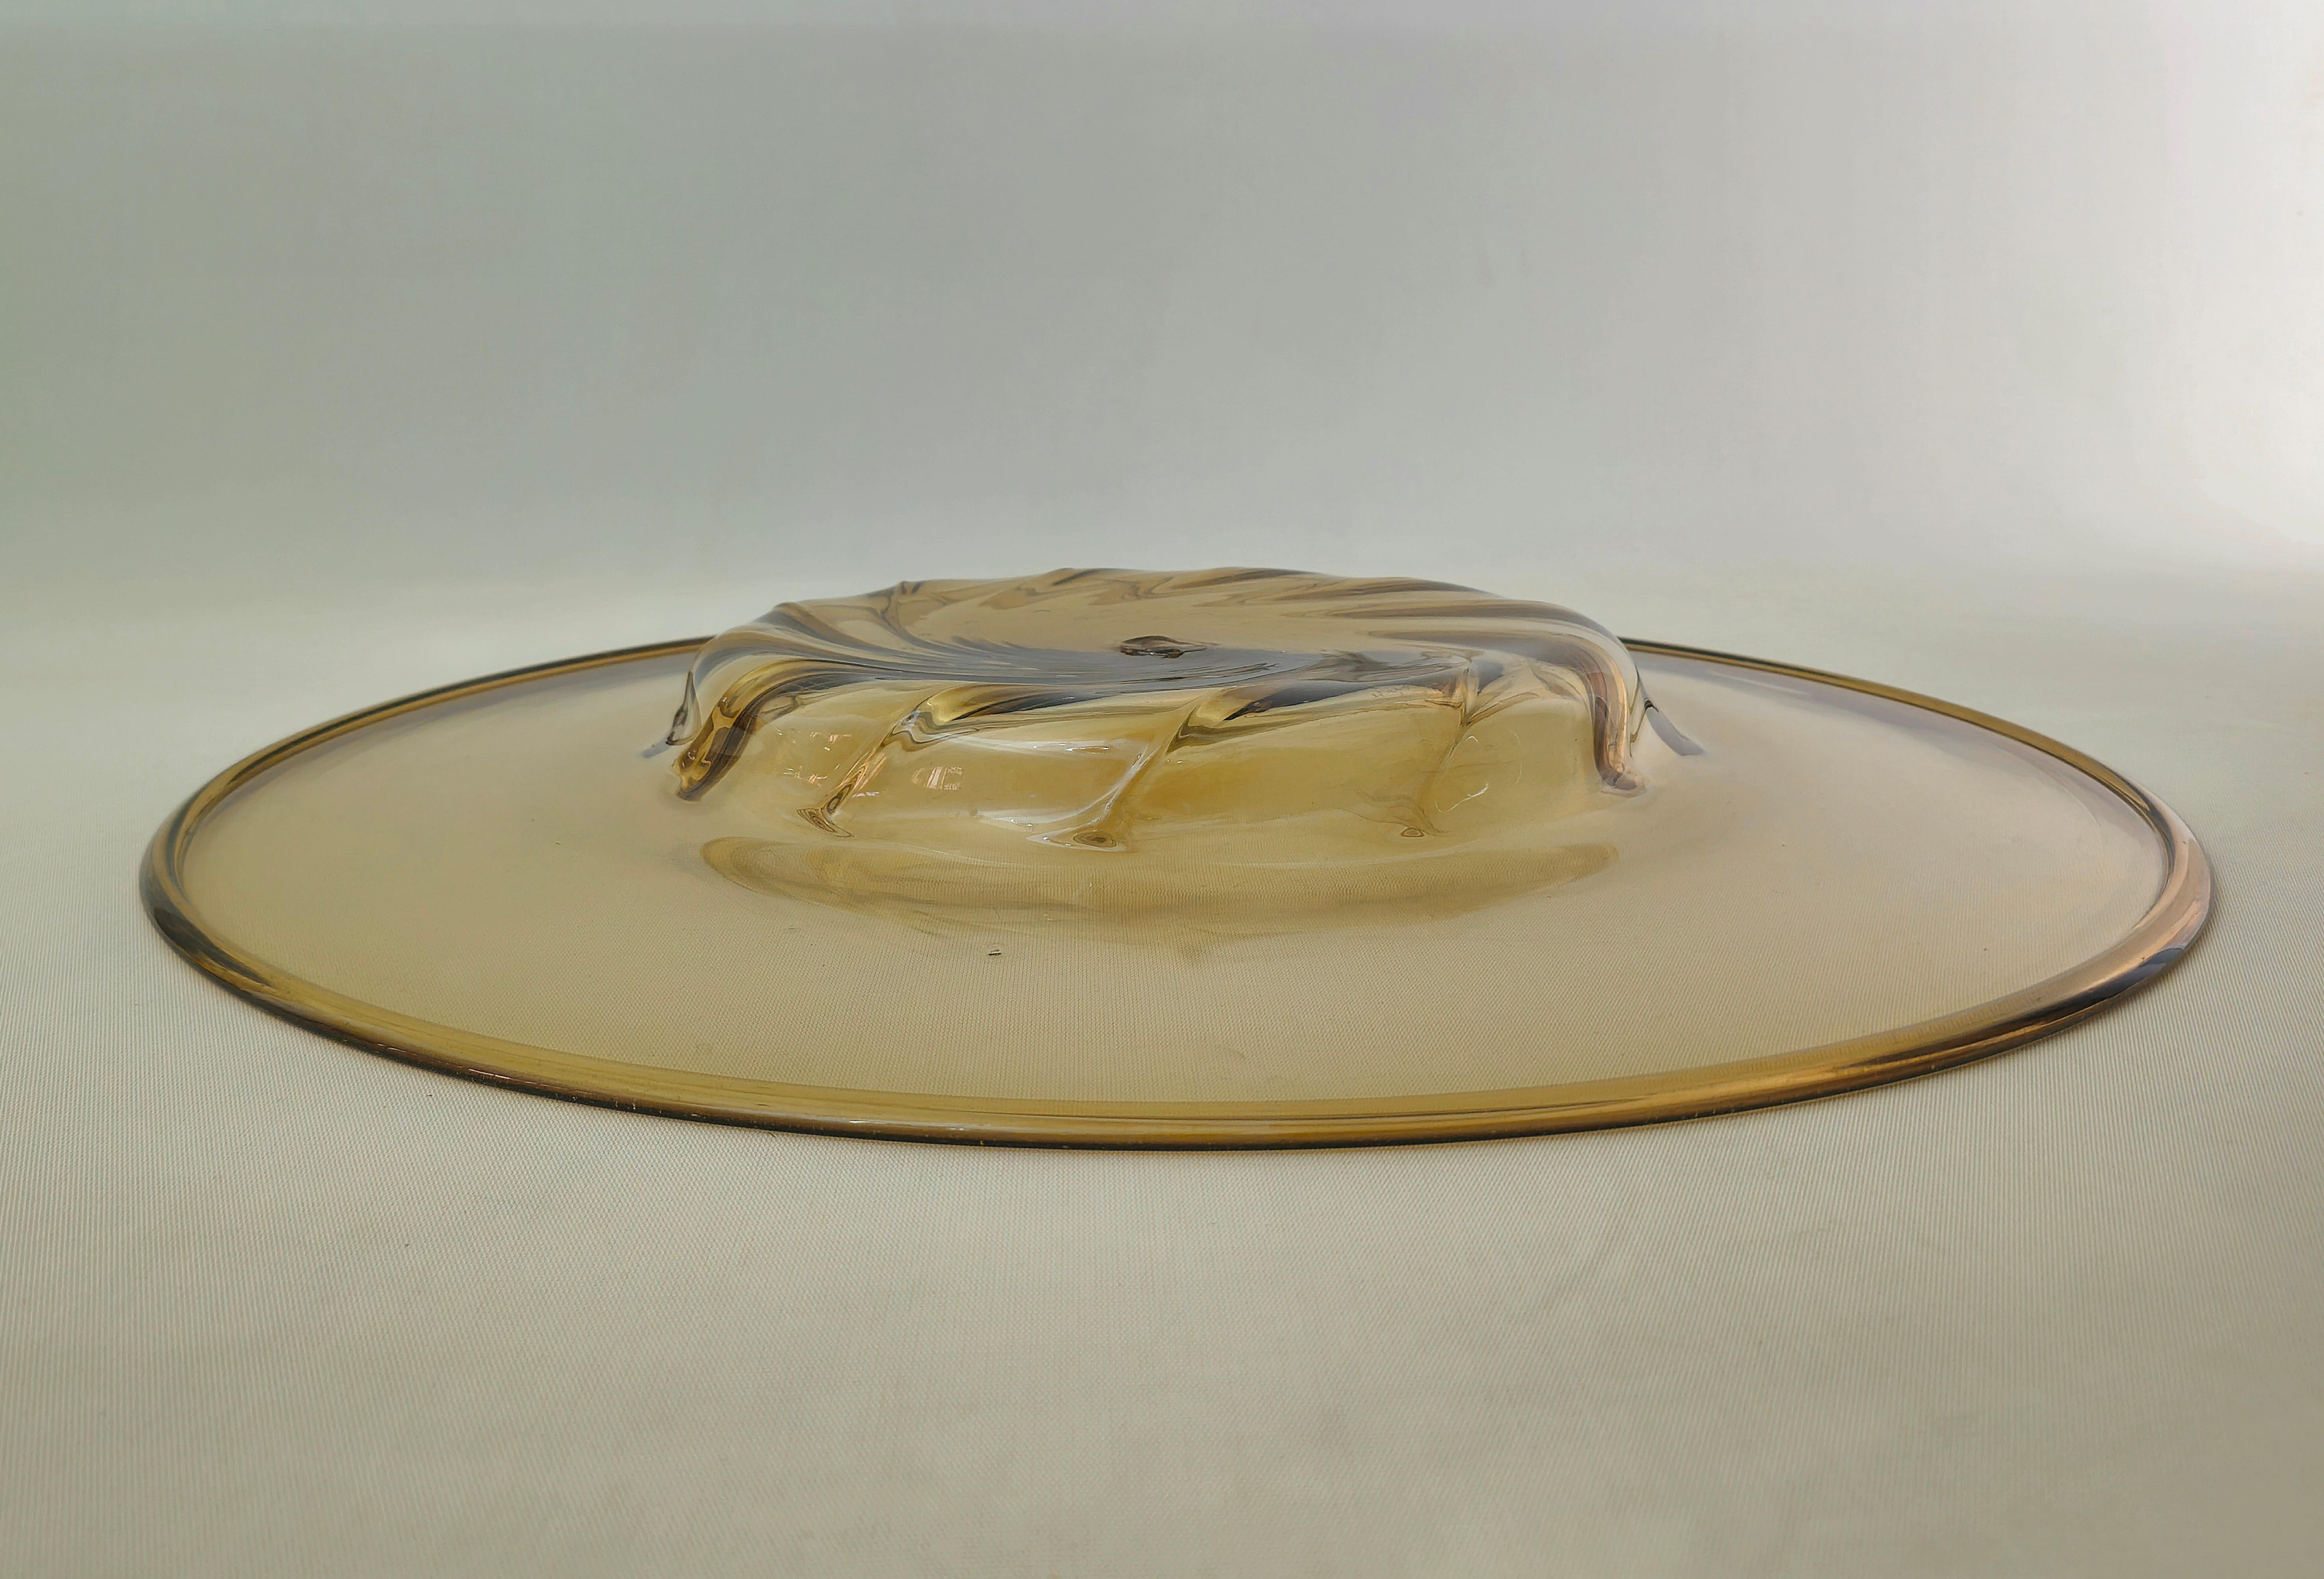 Centerpiece Murano Glass Attributable to Vittorio Zecchin Midcentury Italy 1940s For Sale 3